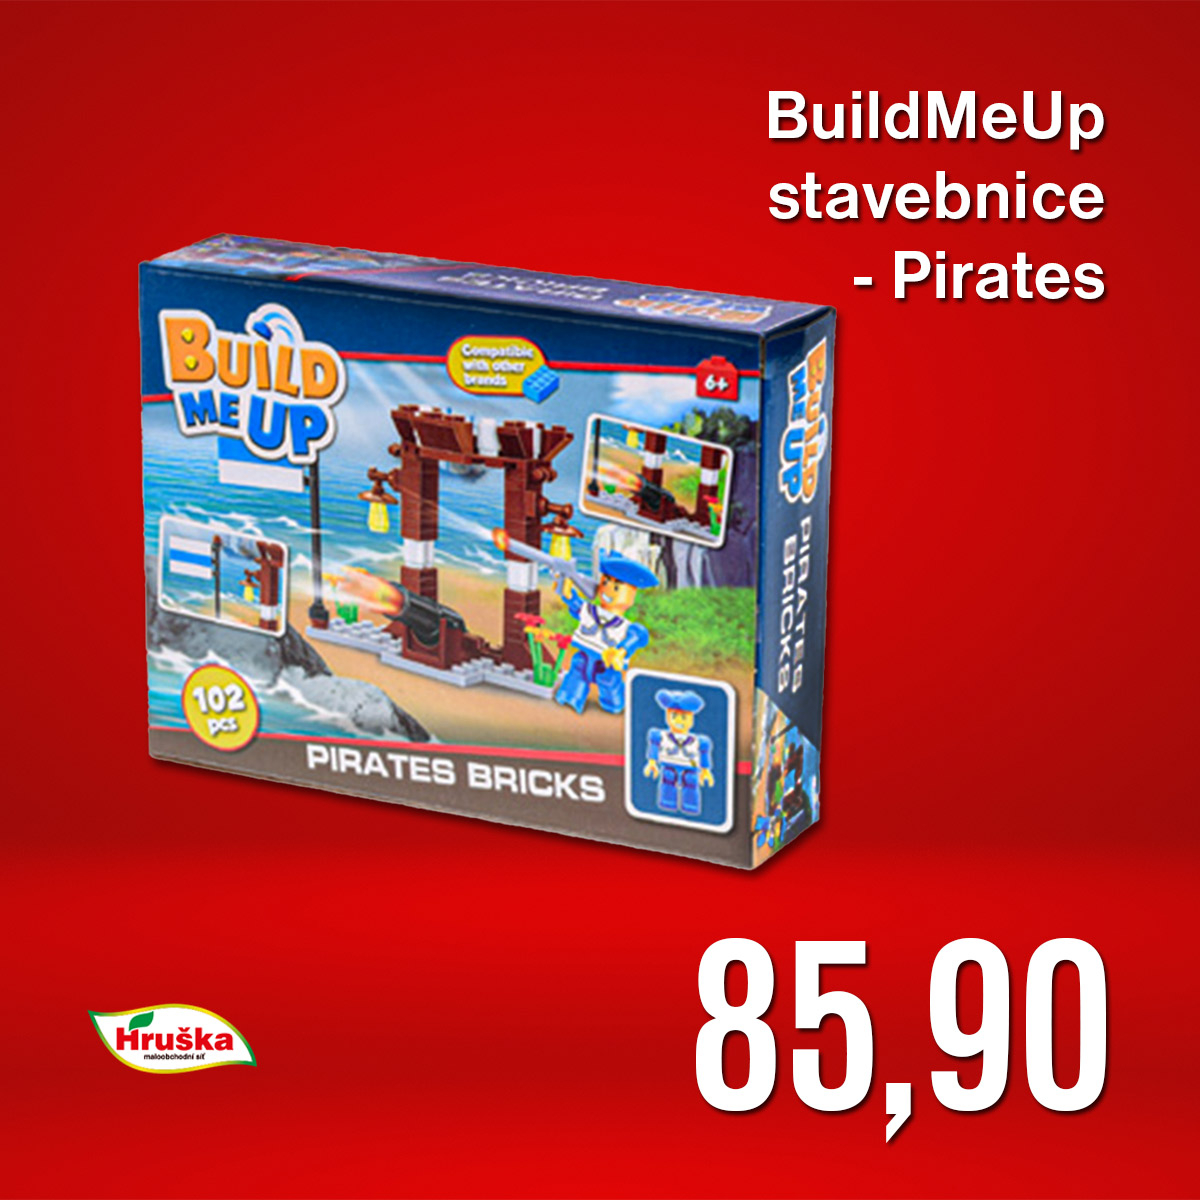 BuildMeUp stavebnice - Pirates bricks 96-103 ks